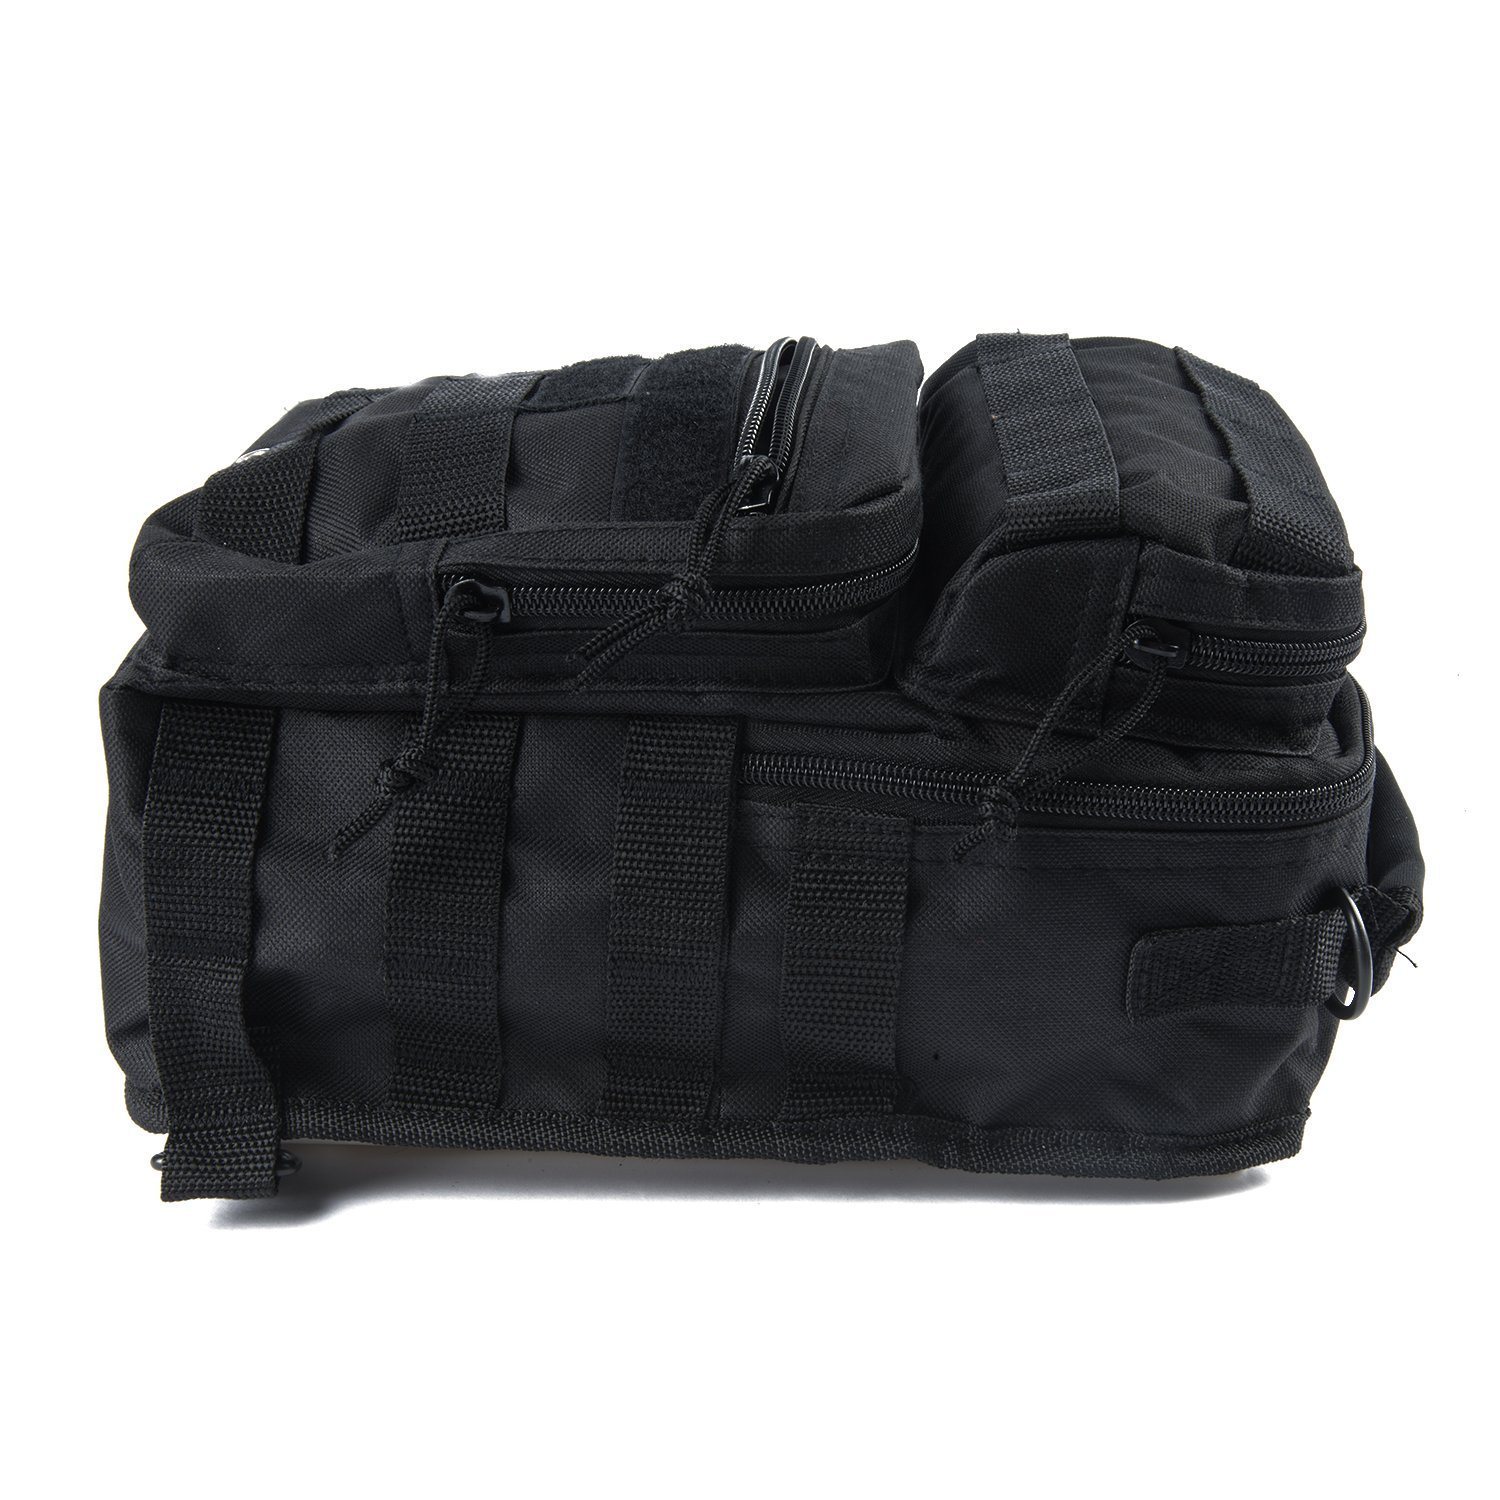 Newest Tactical Medical Sling Bag for Outdoor